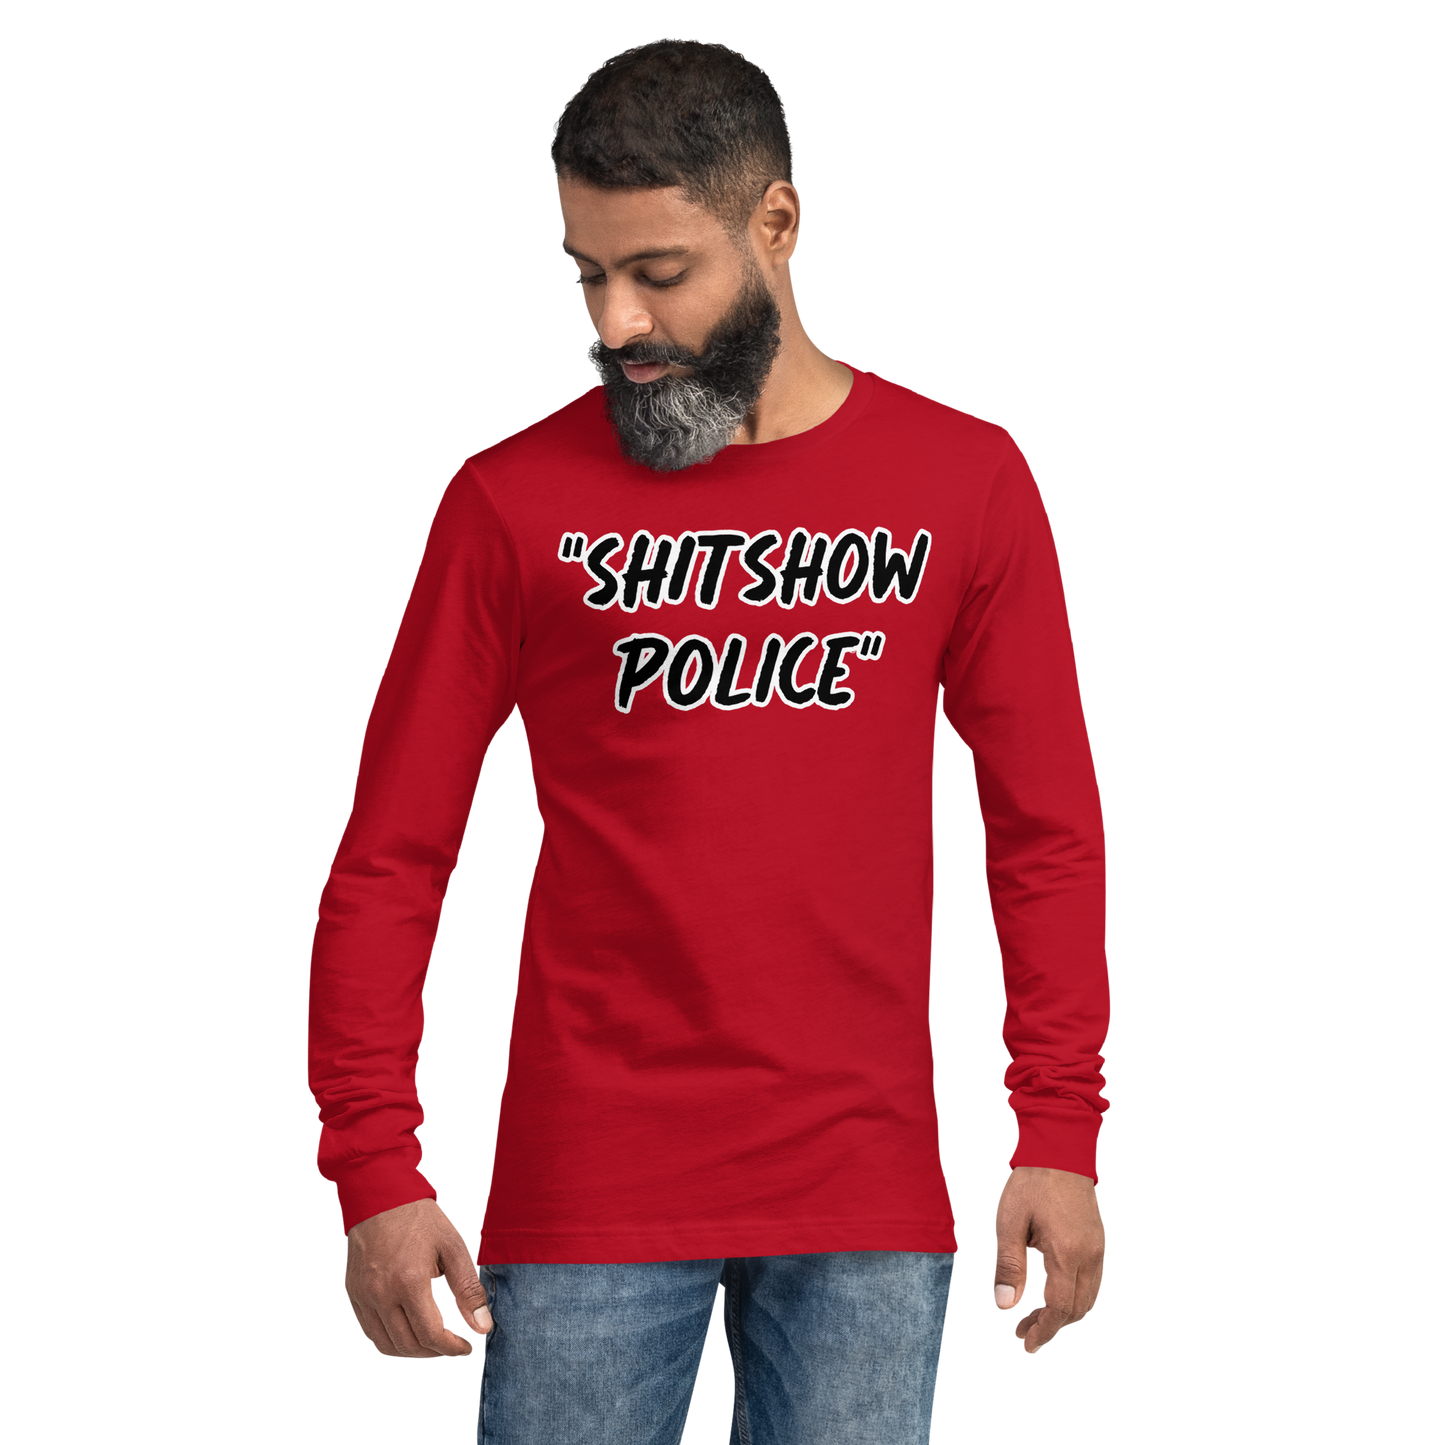 Police Show Long Sleeve Shirt